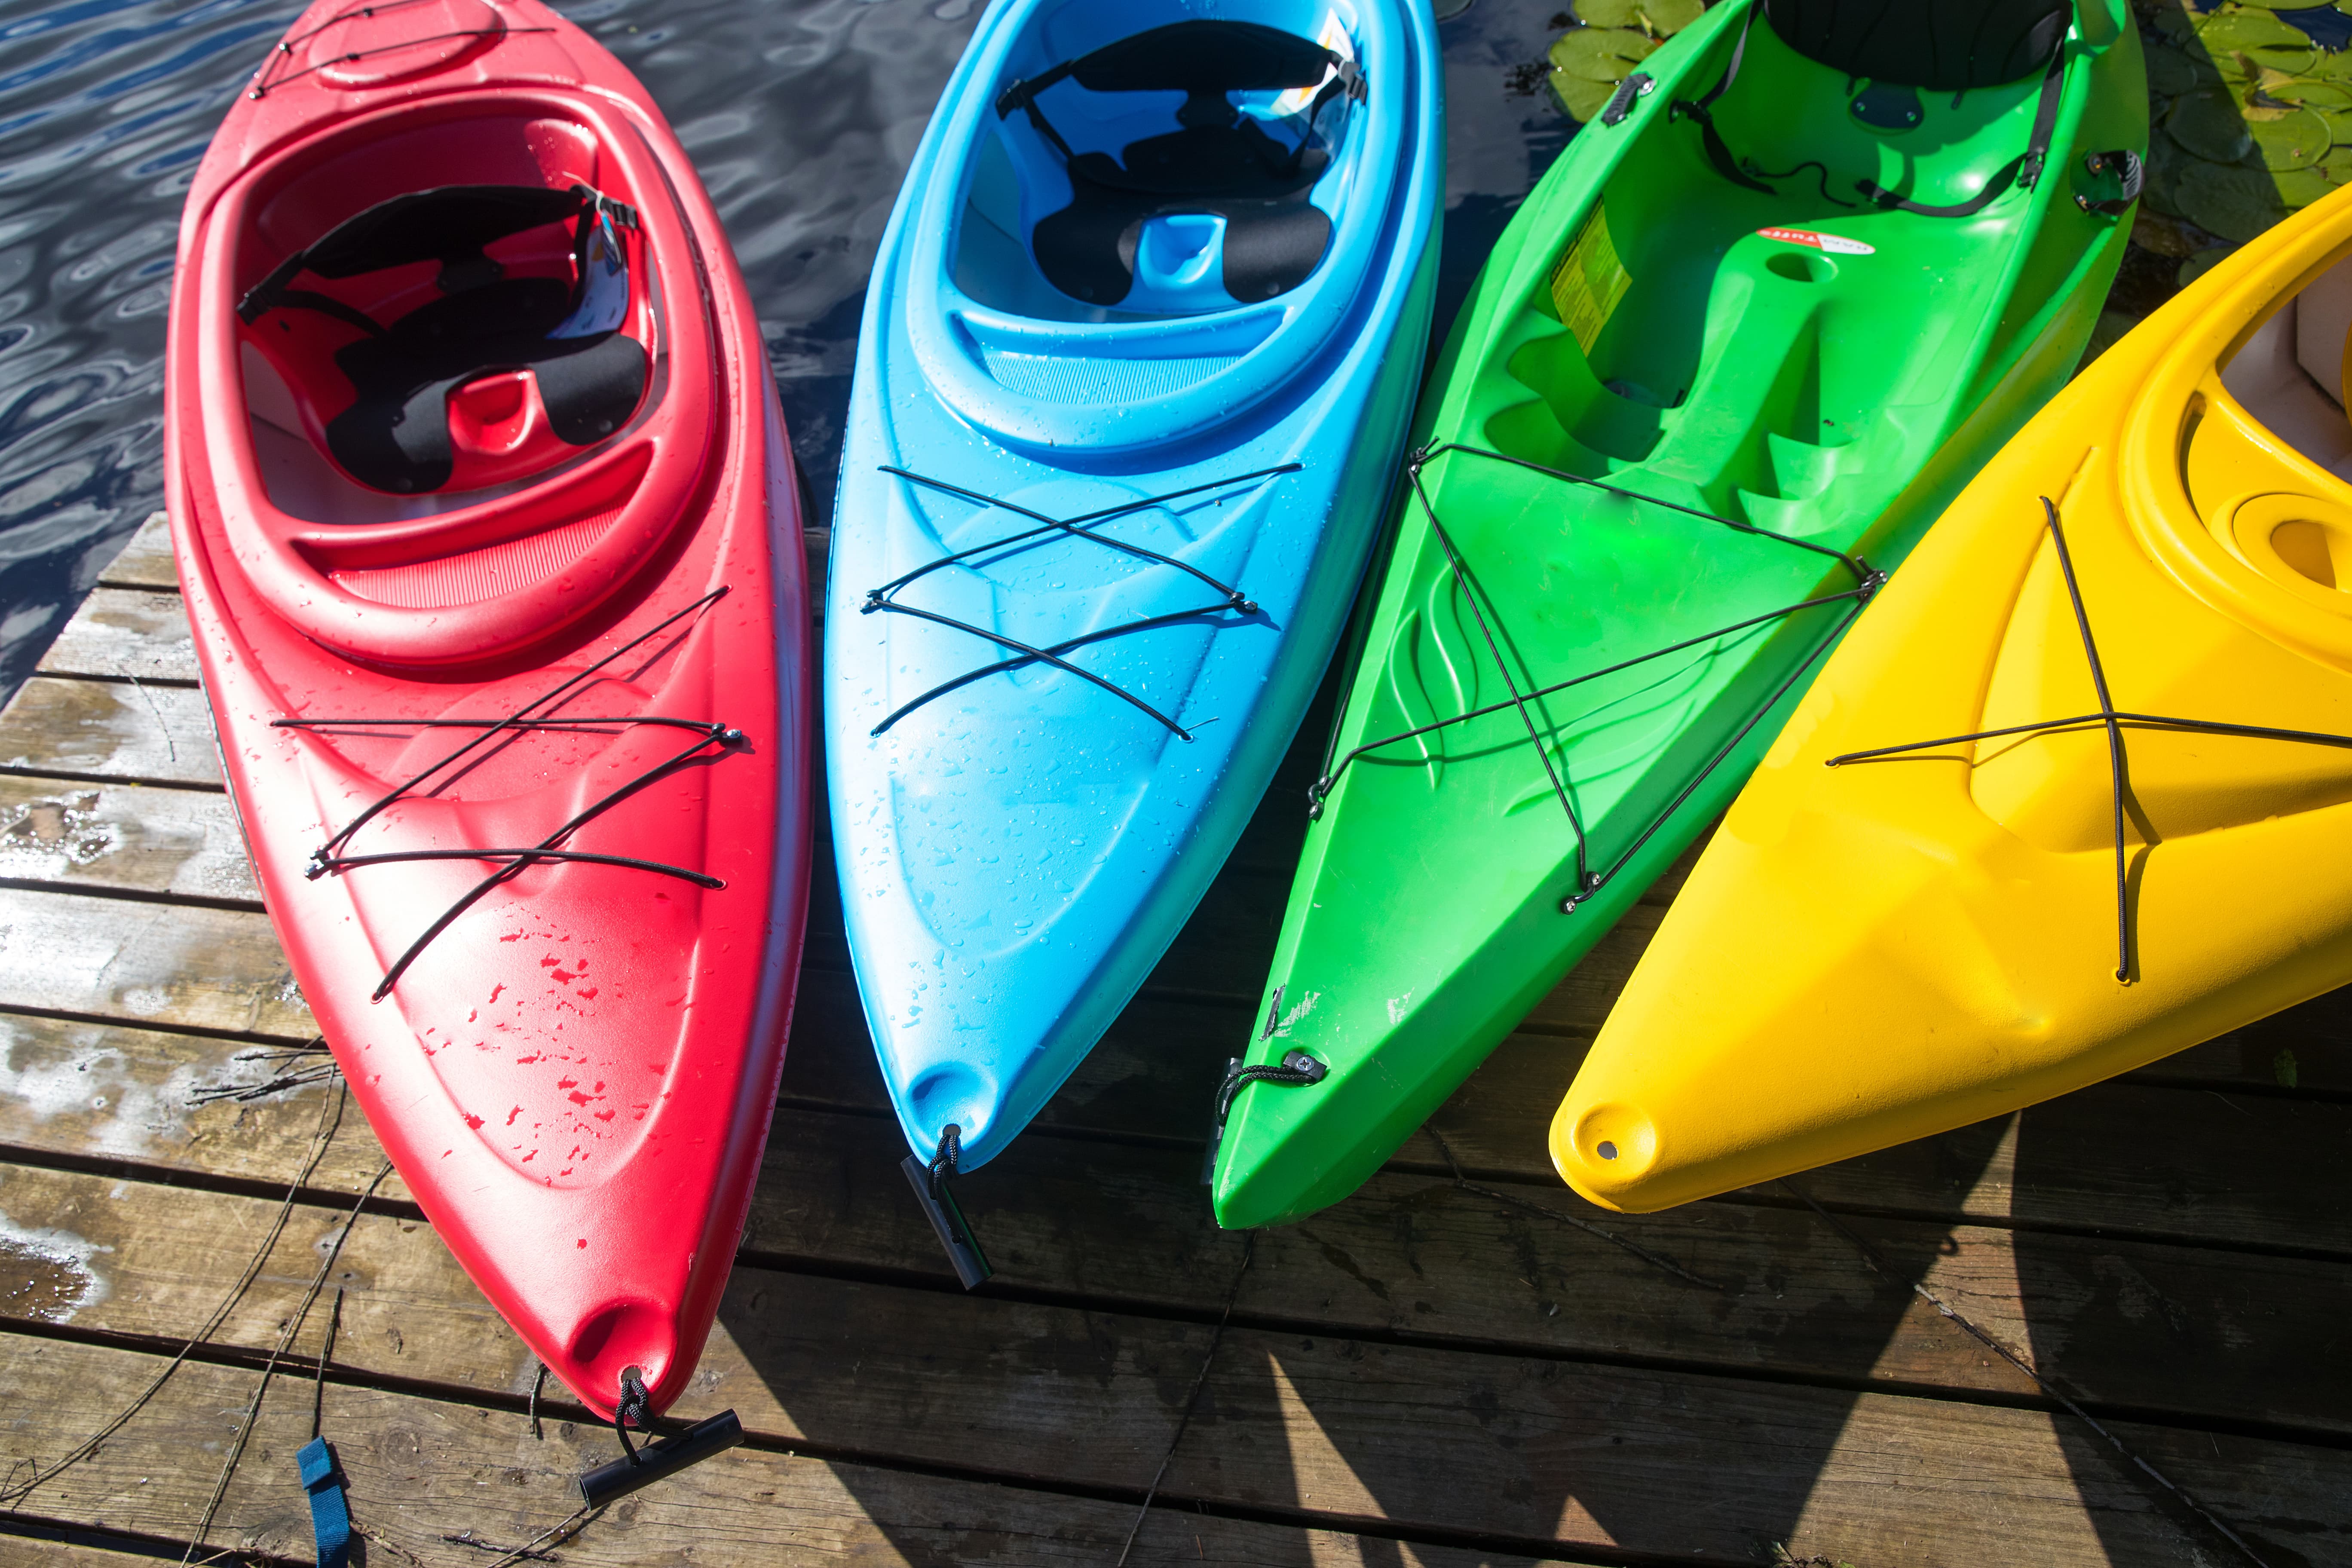 Group of Colorful Kayaks on Dock